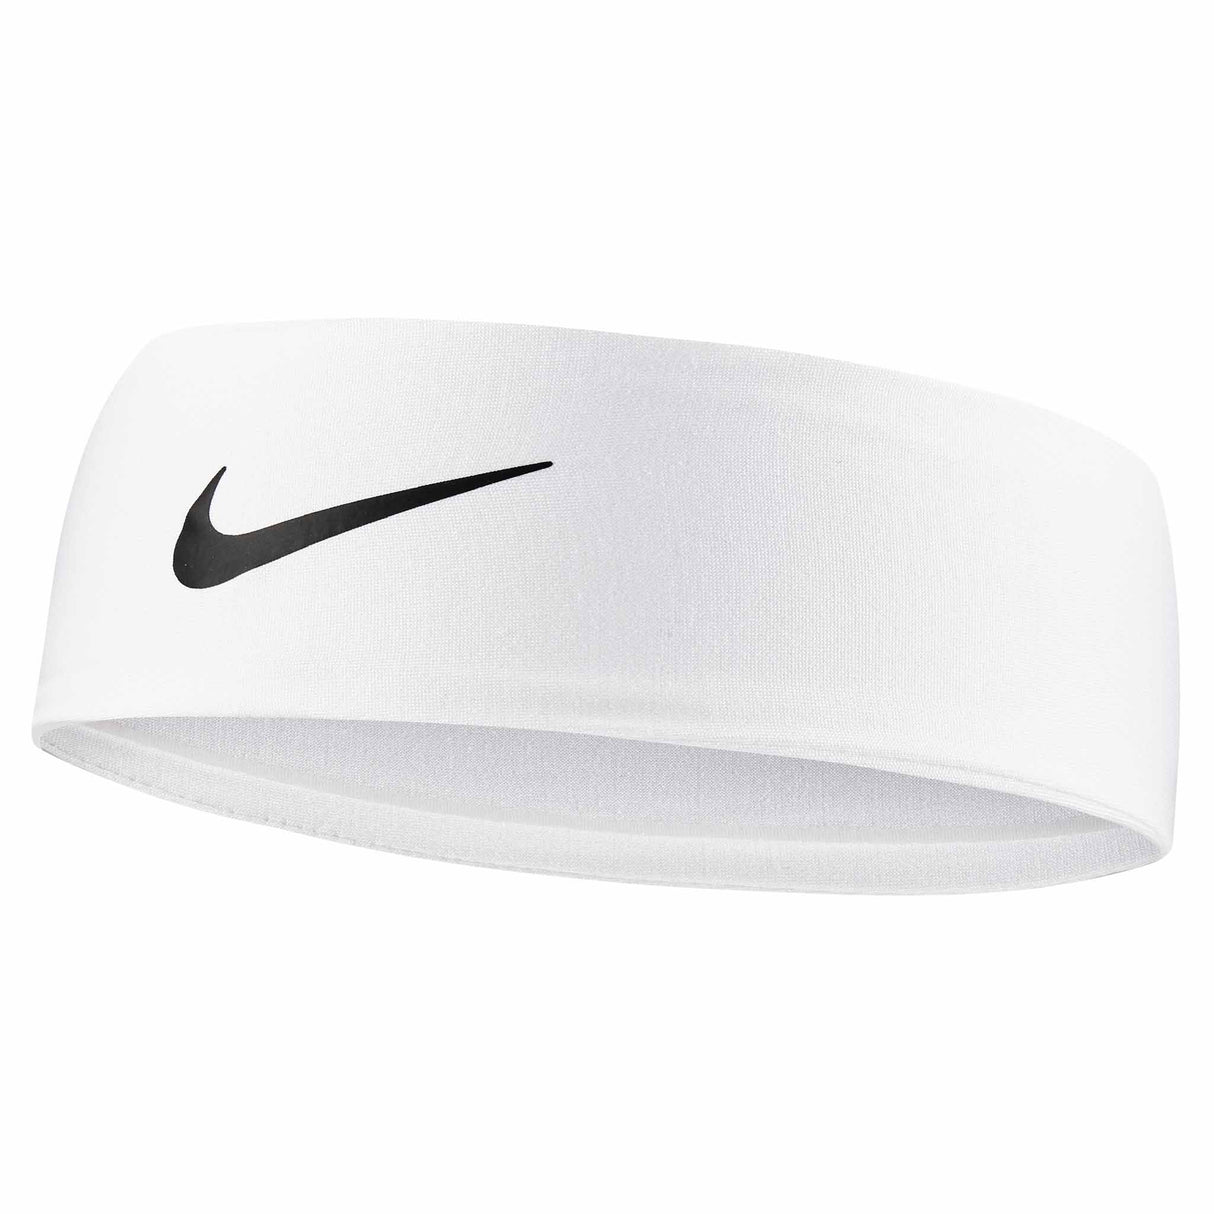 Nike Fury Headband 3.0 bandeaux pour cheveux - White / Black